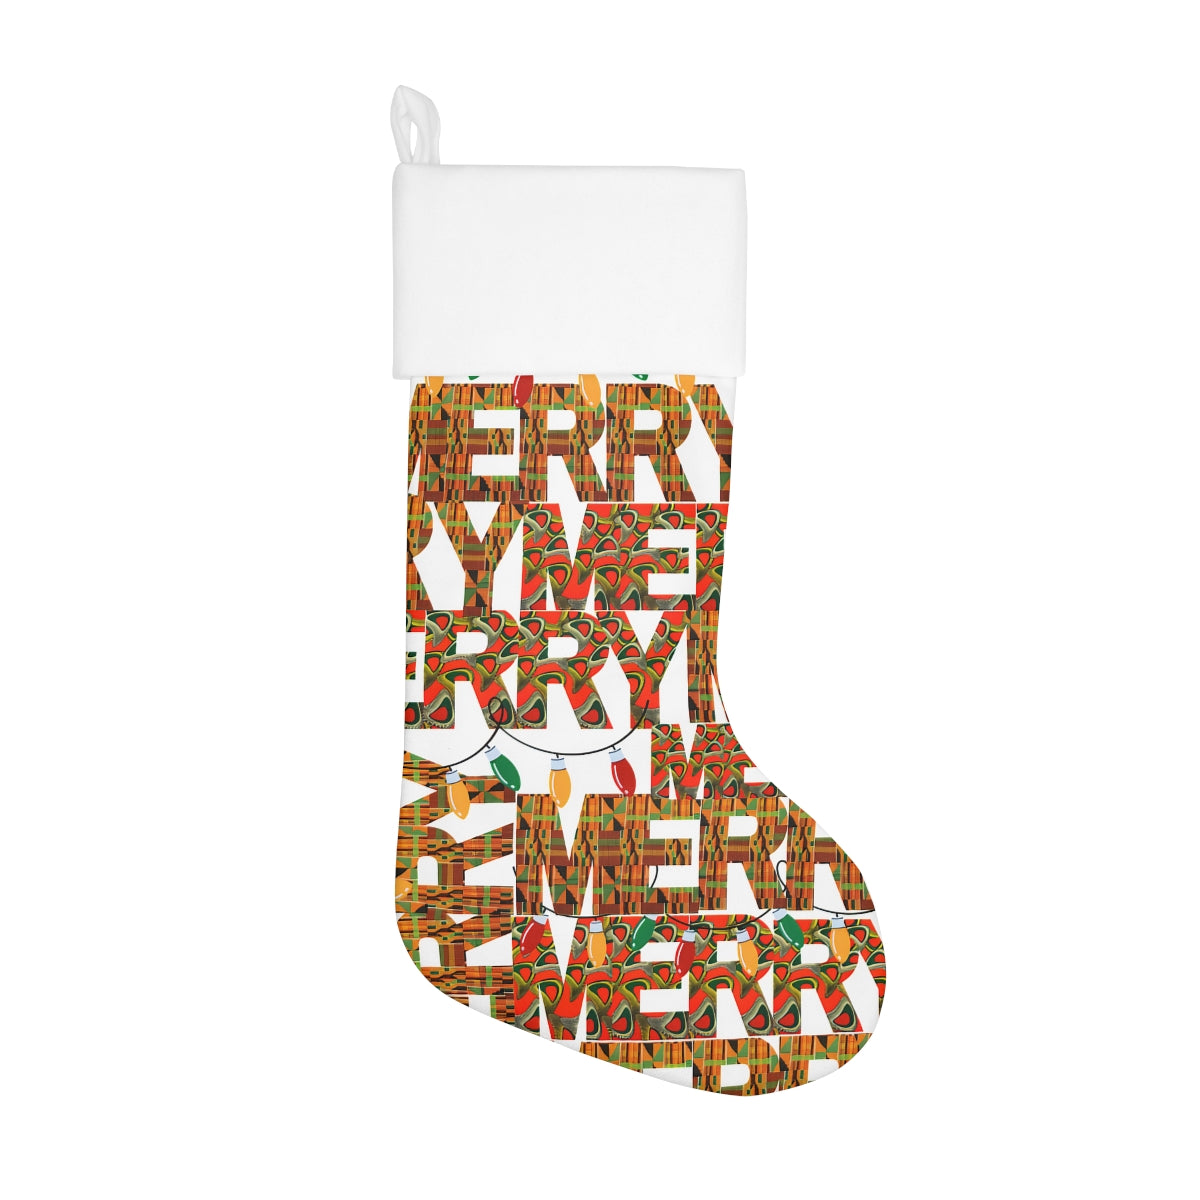 "Merry" Holiday Stocking